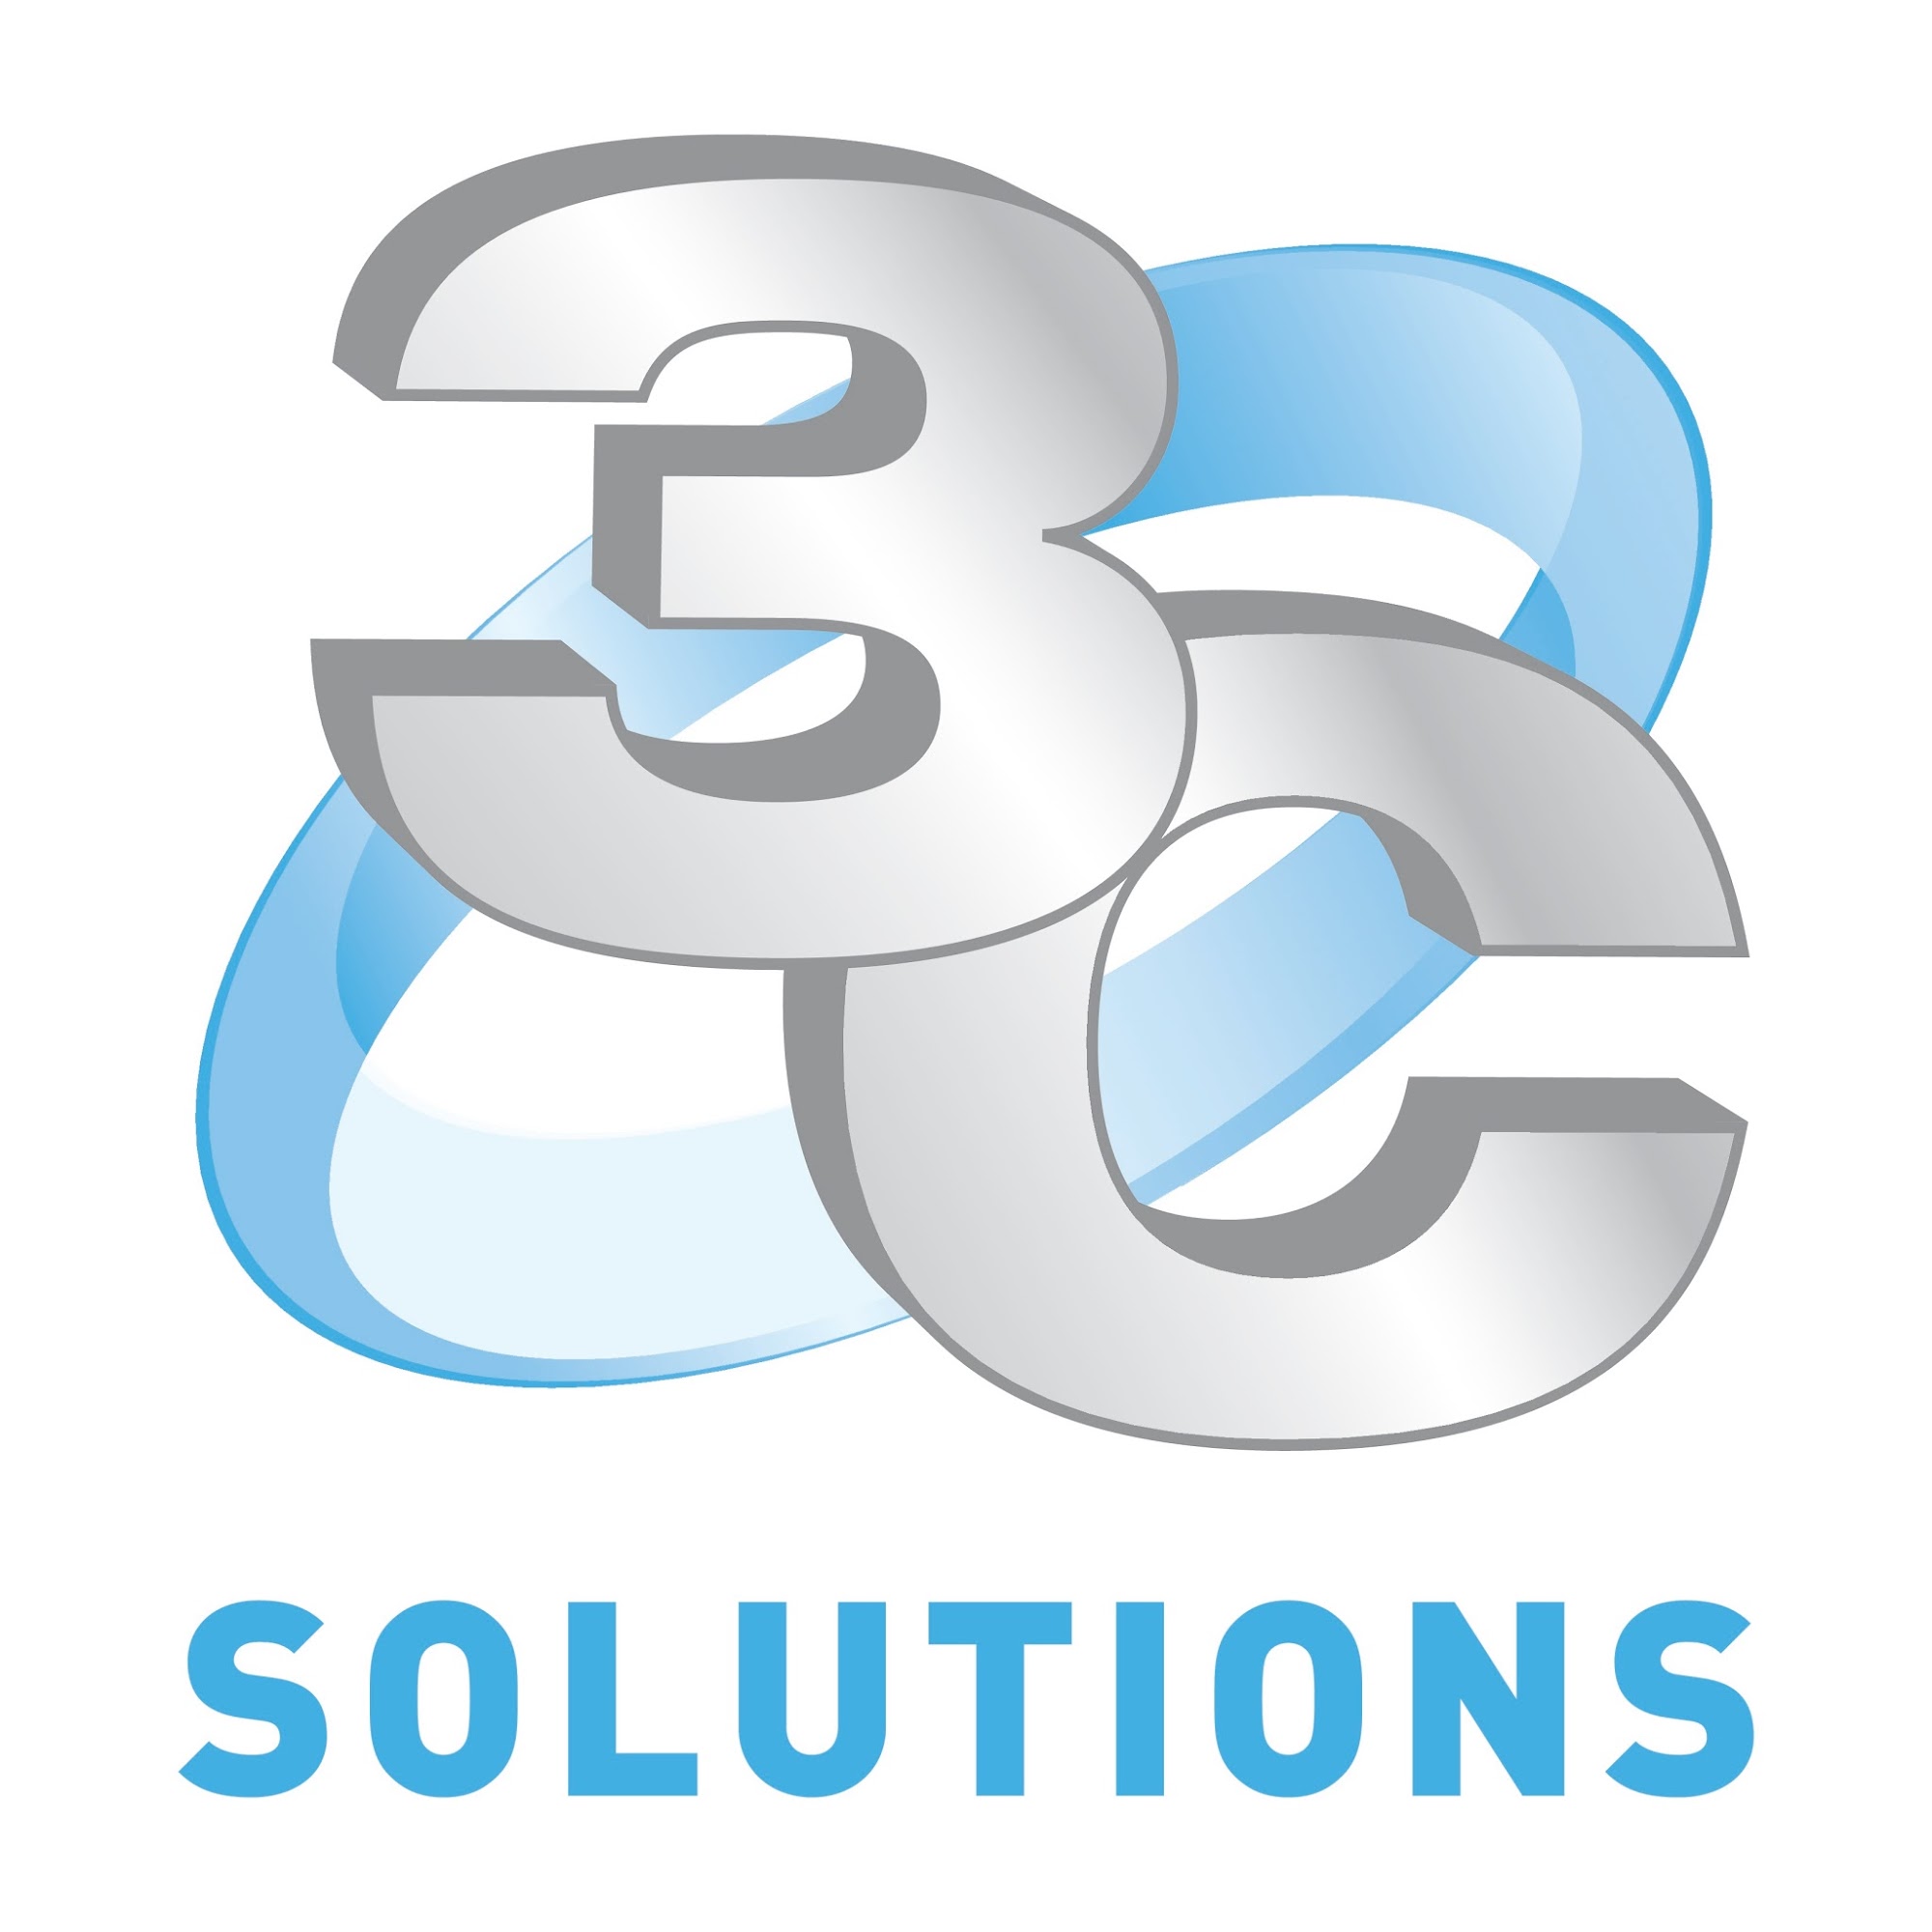 3C Solutions